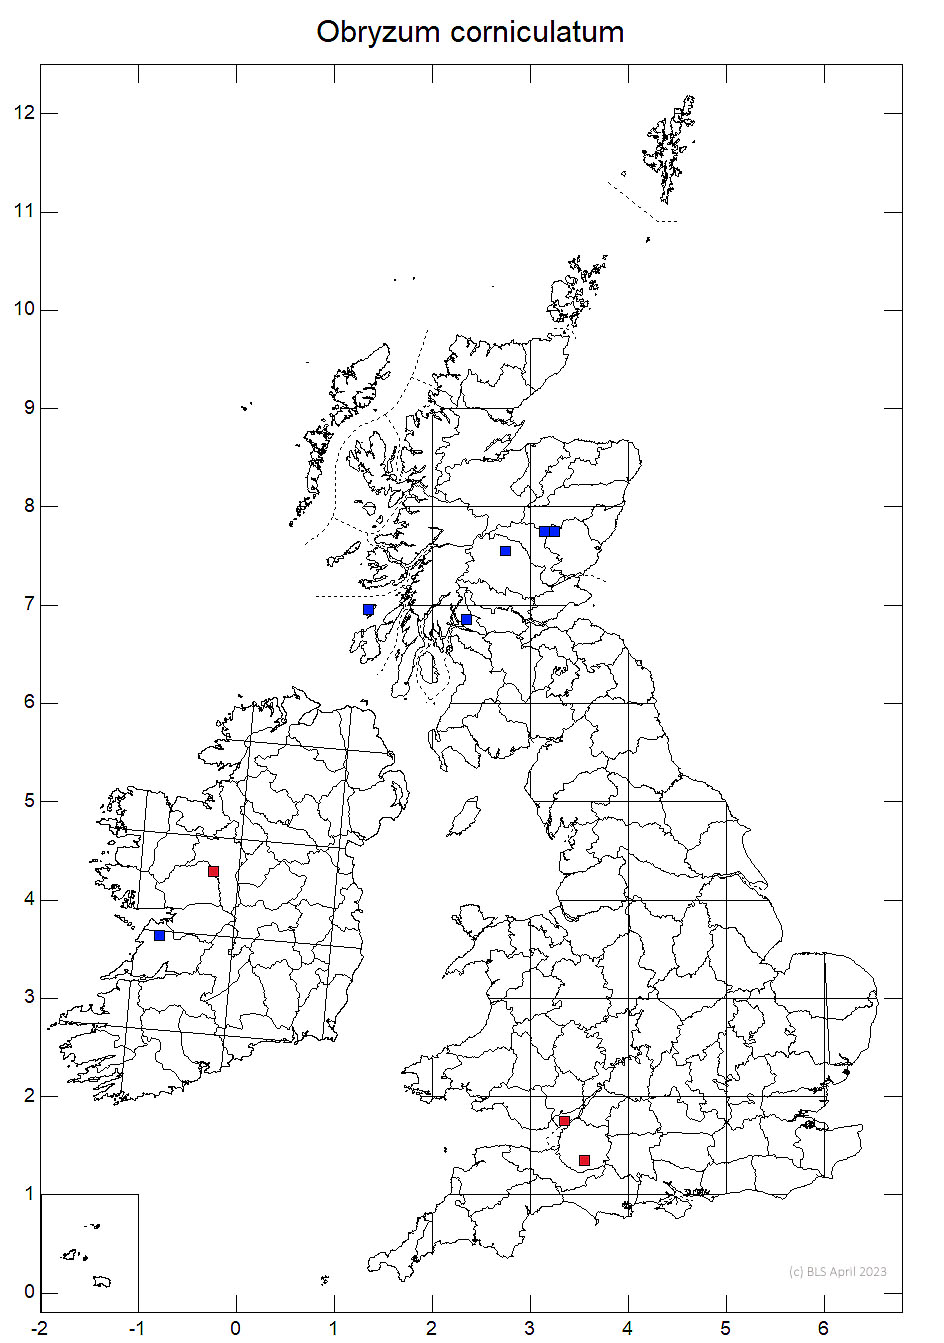 Obryzum corniculatum 10km sq distribution map